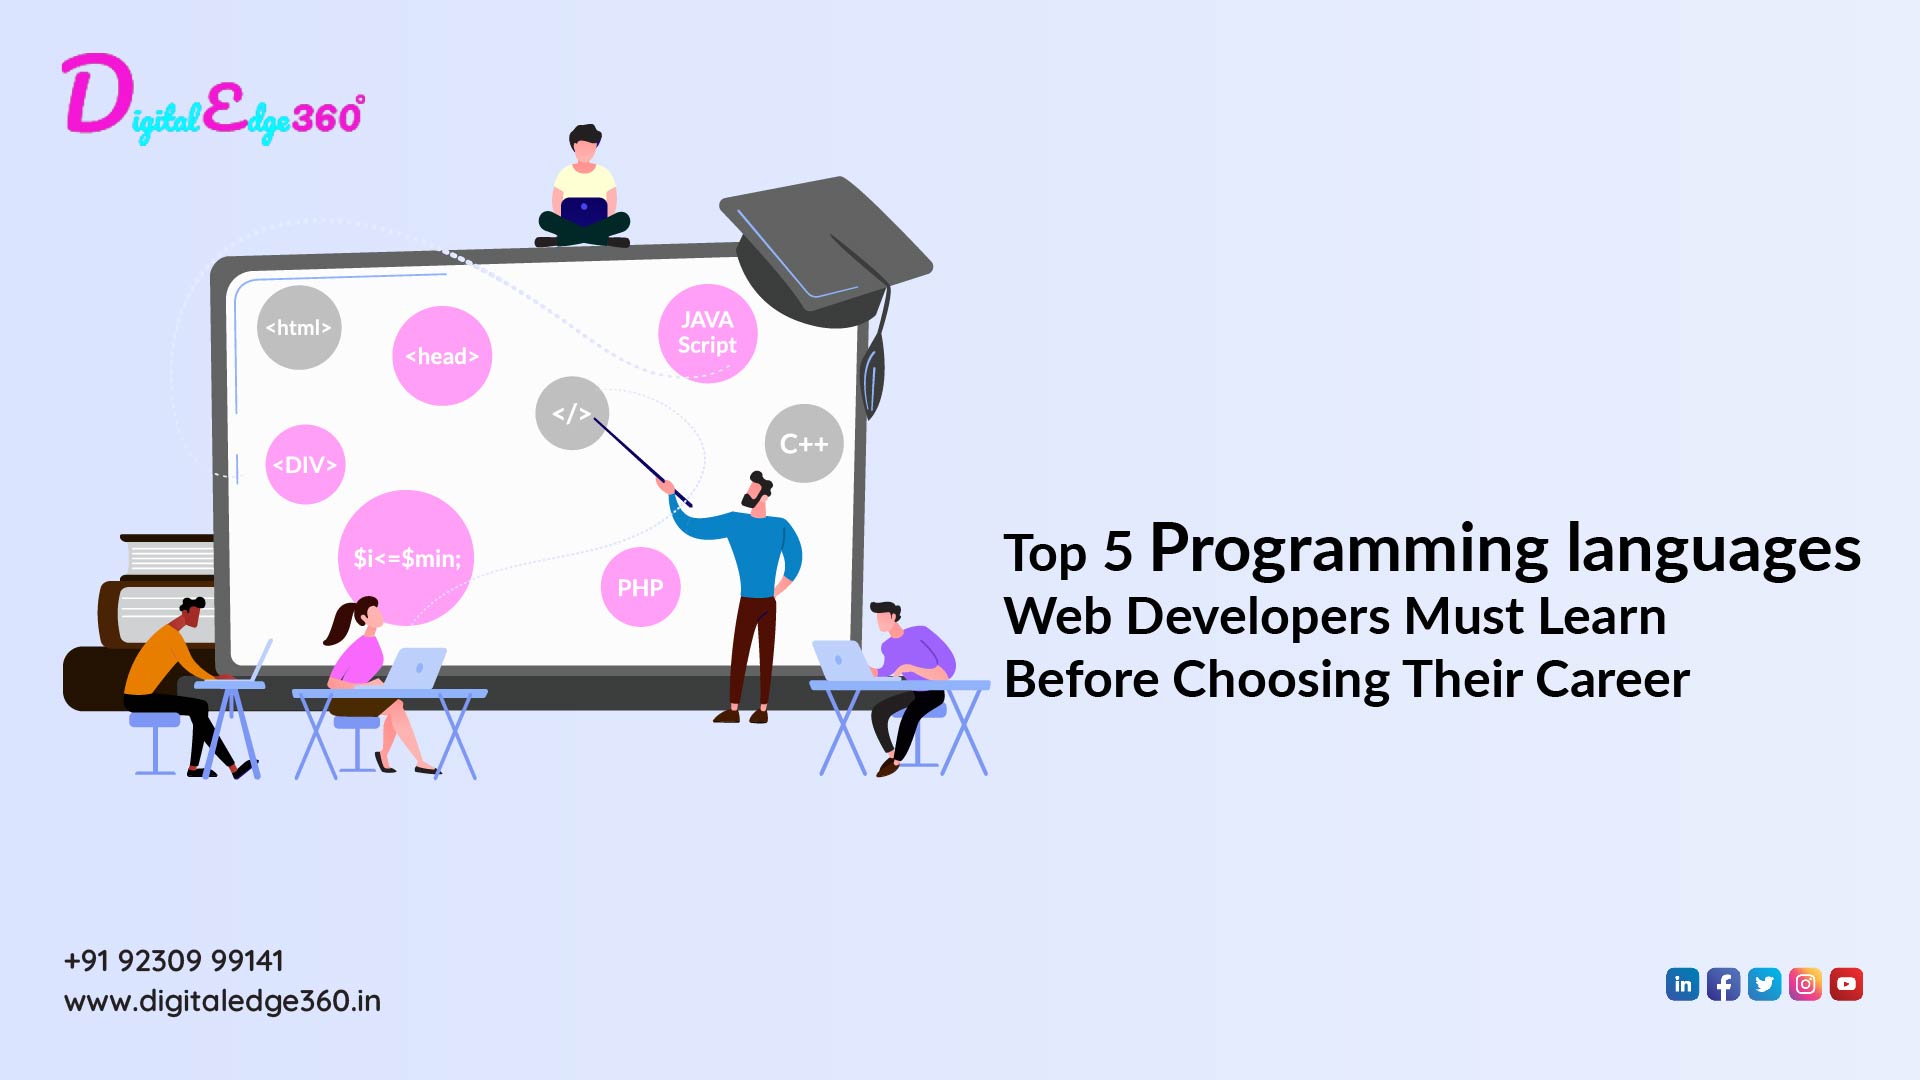 Top 5 Programming languages Web Developers Must Learn Before Choosing Their Career